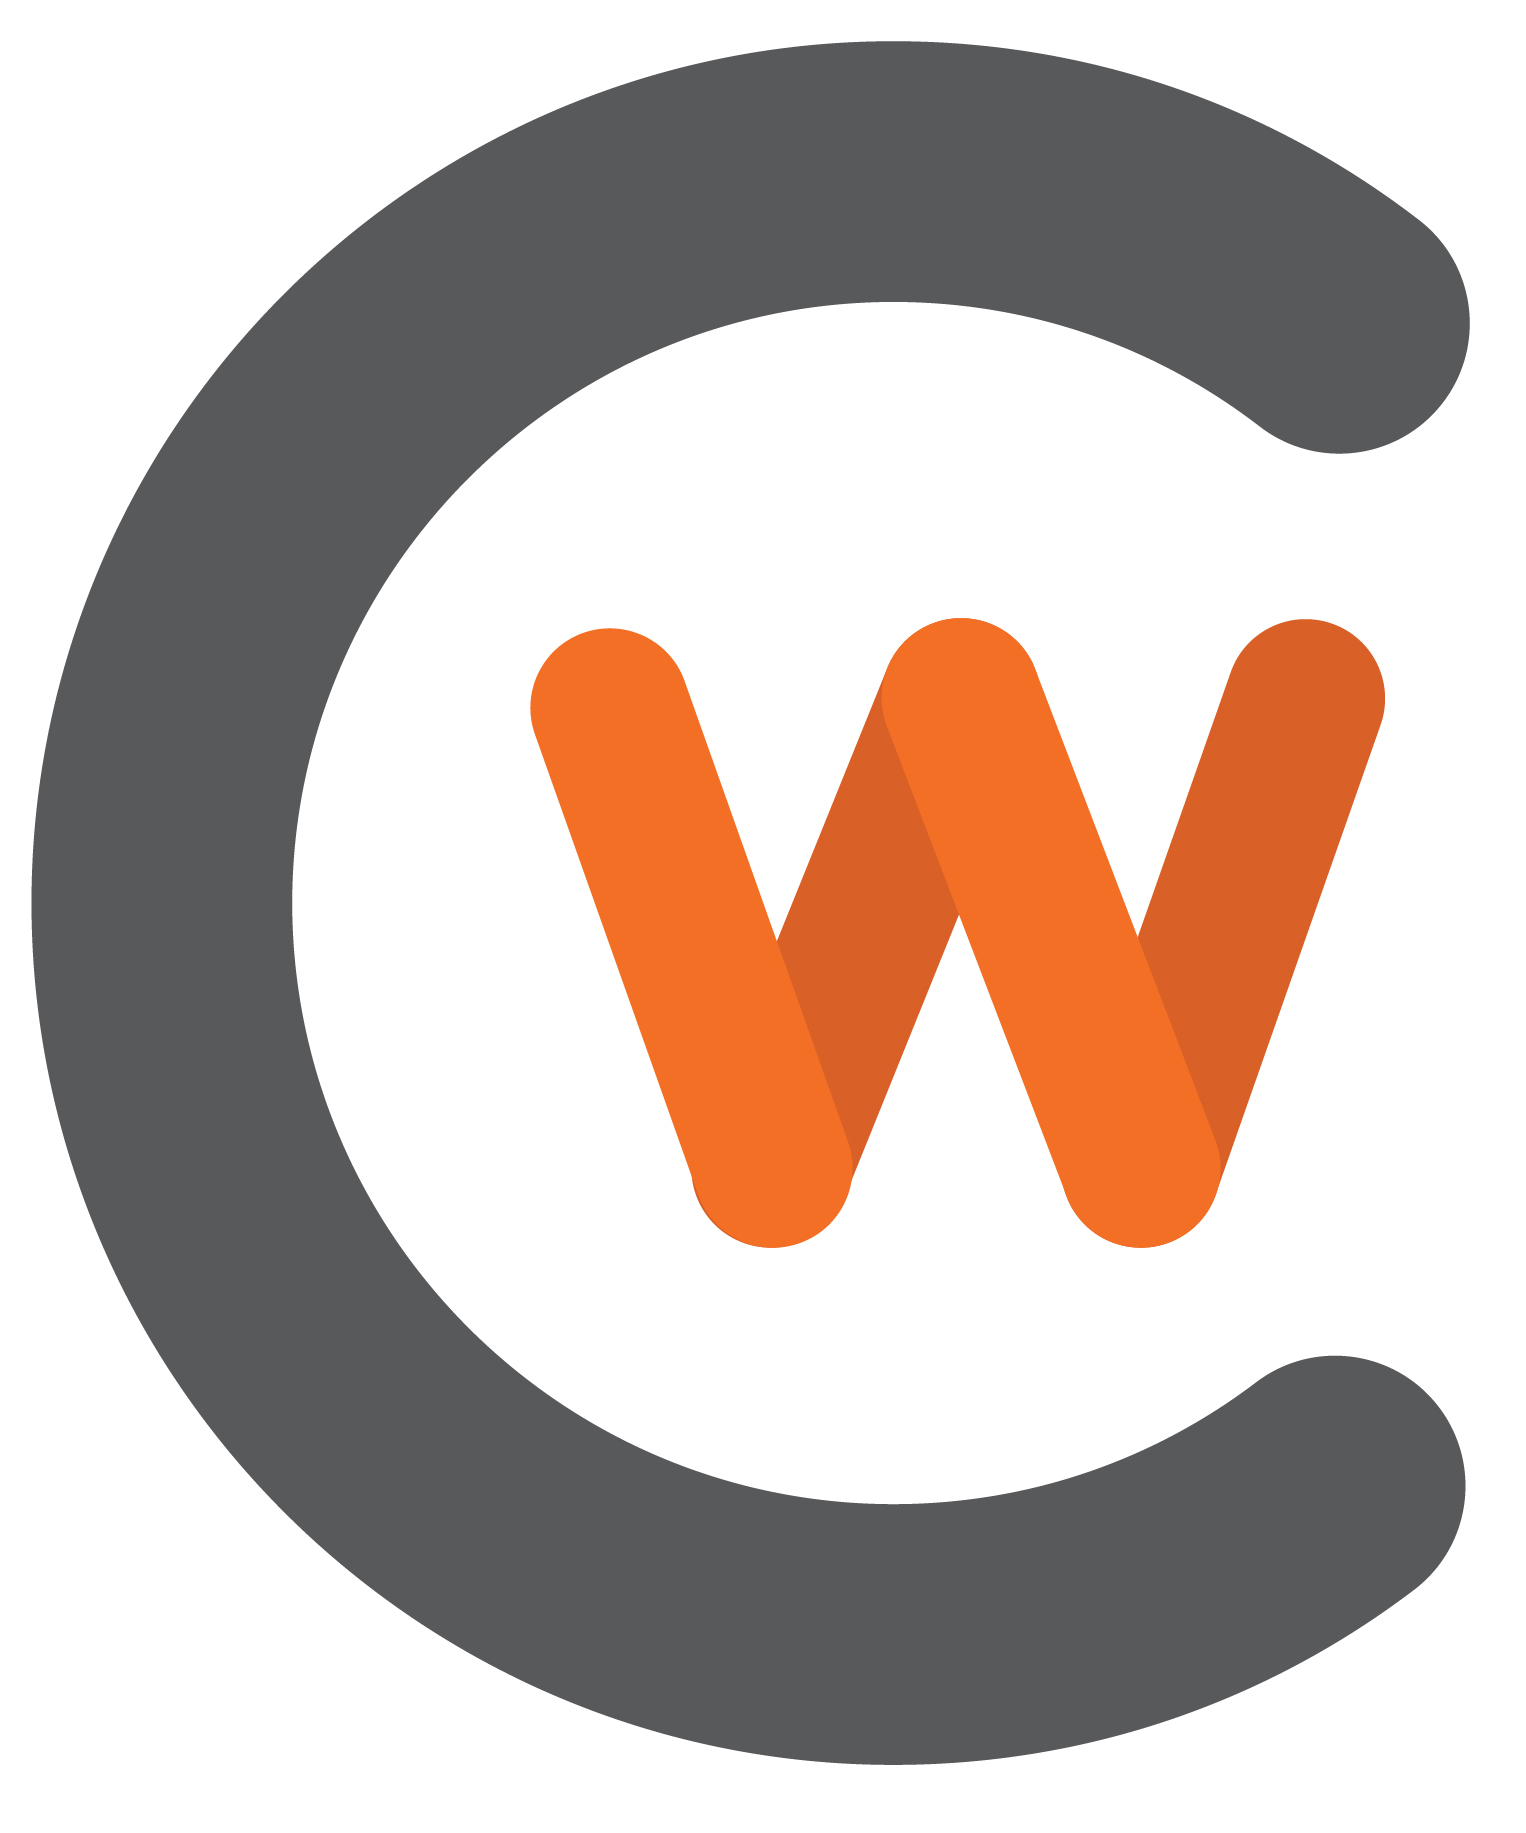 Gray and orange logo